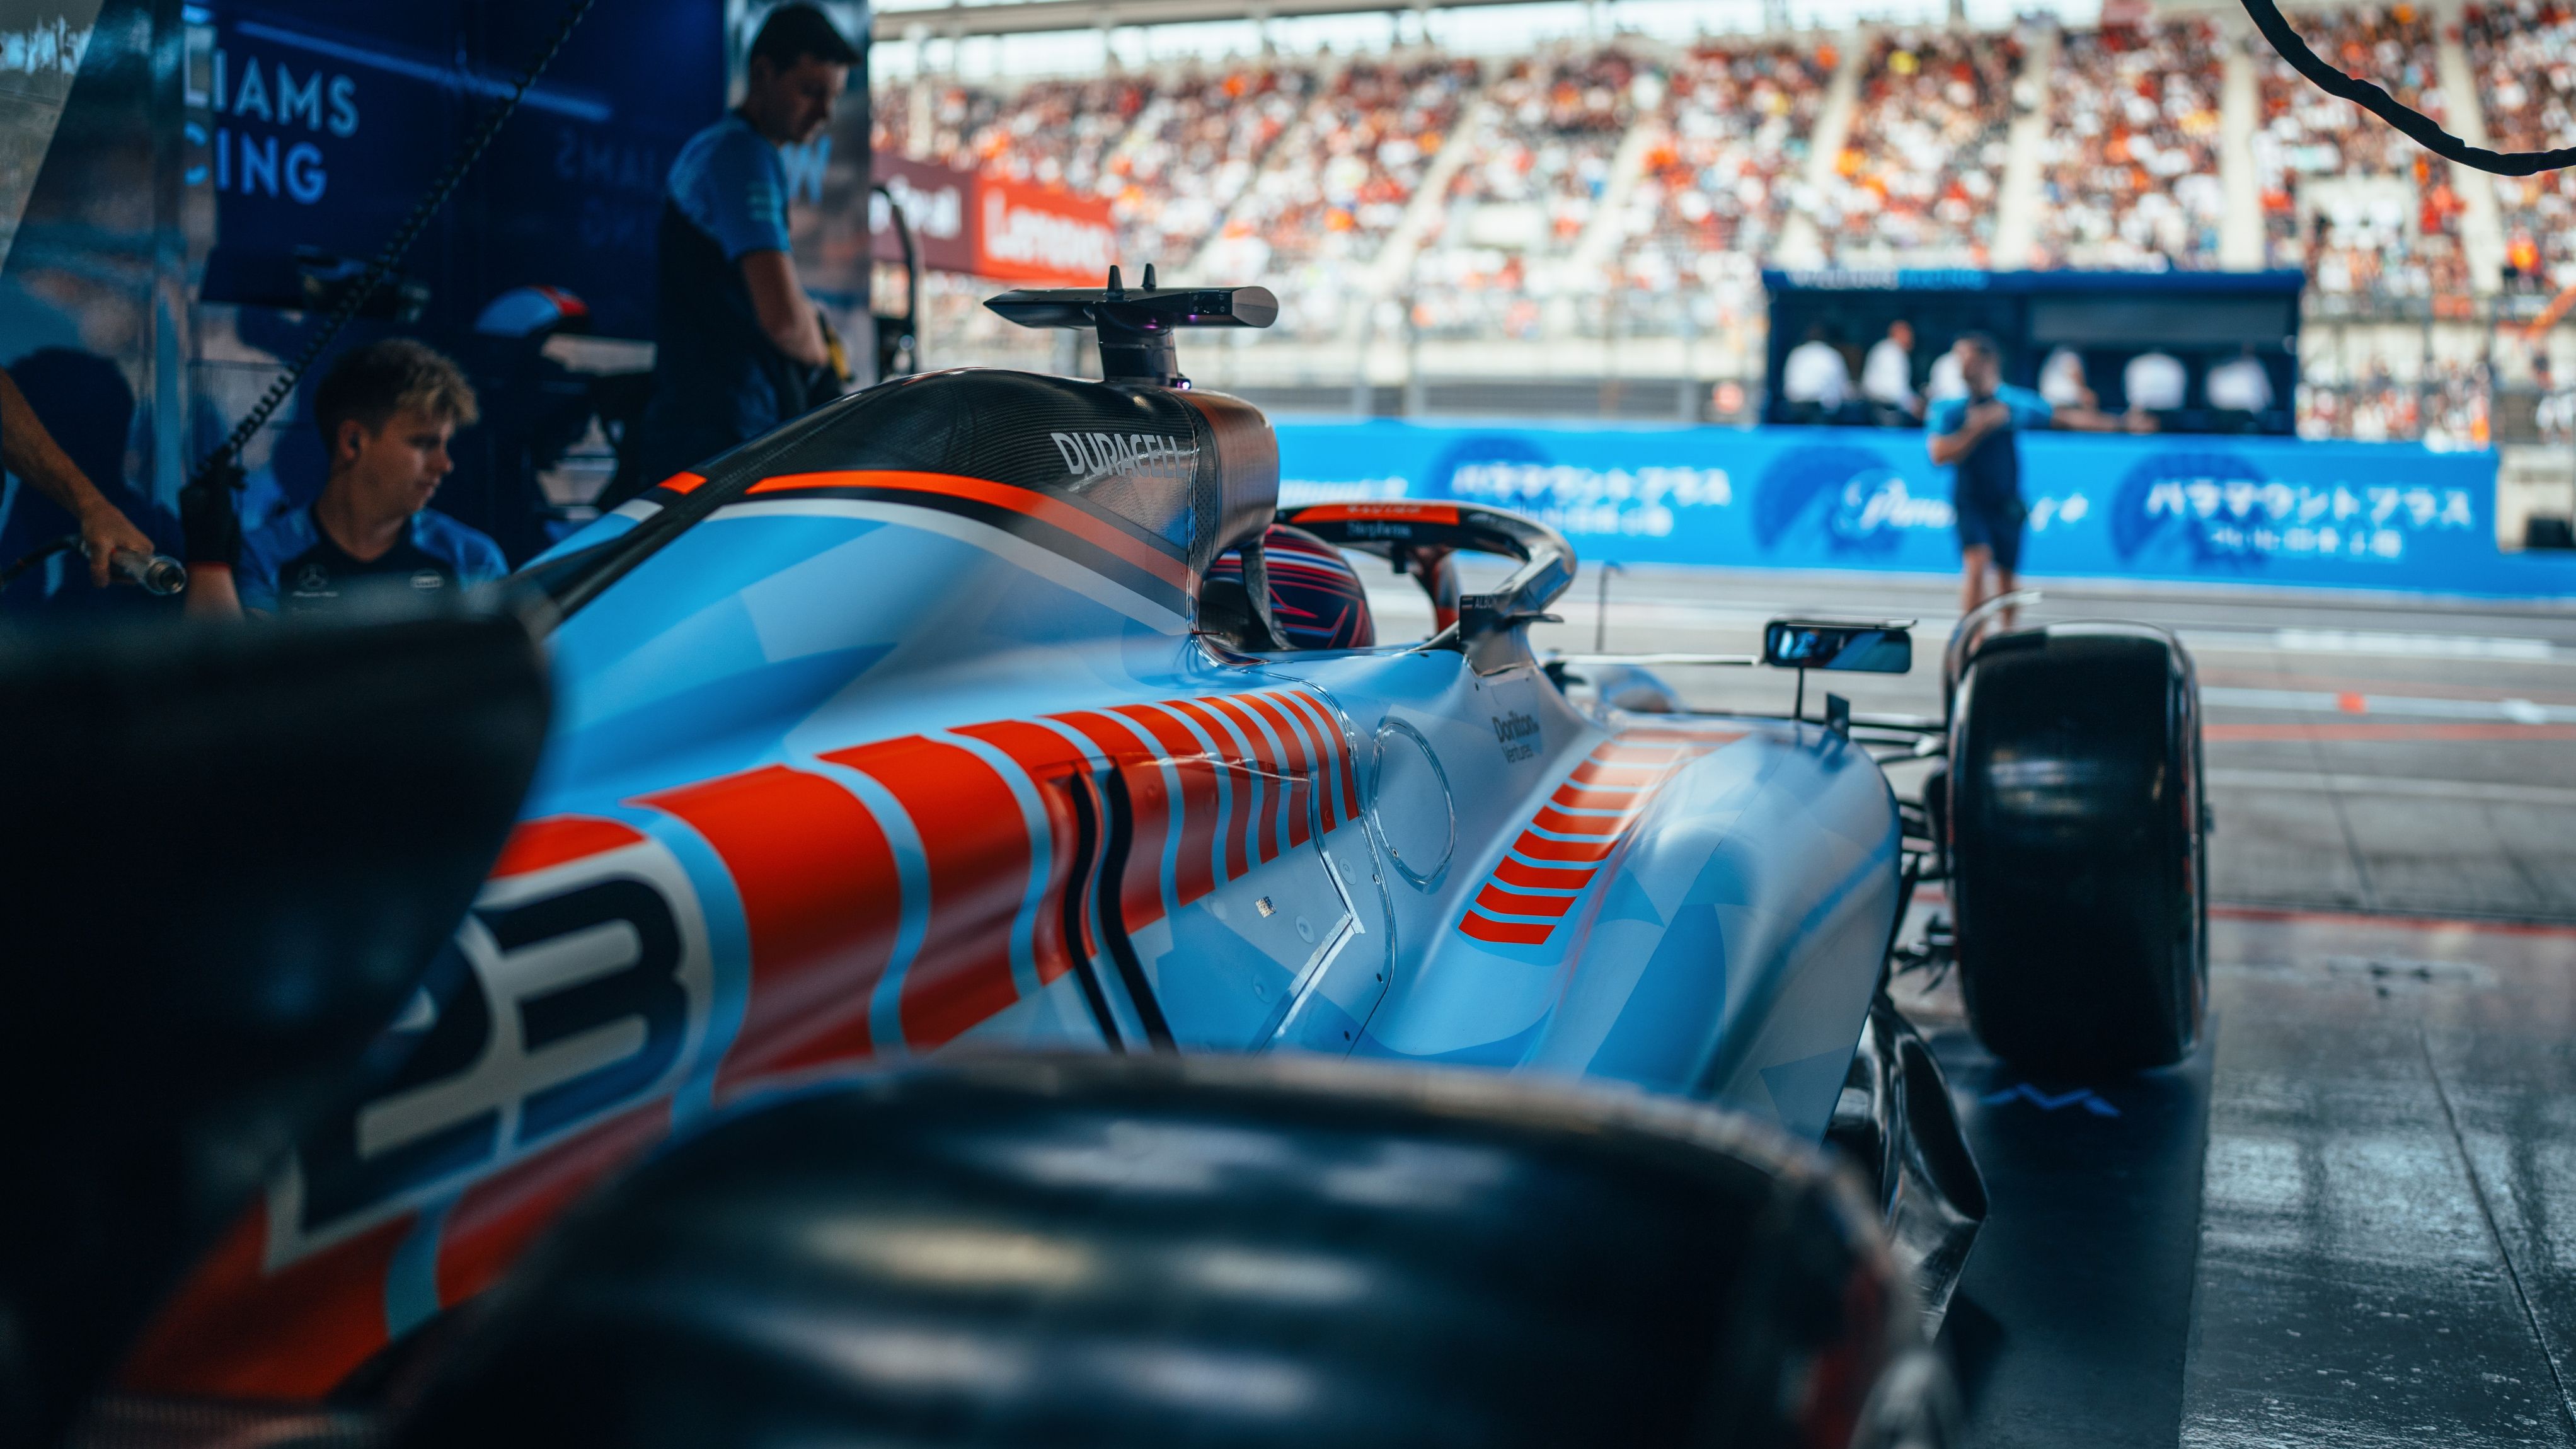 Williams Racing Report: Mixed emotions on Saturday in Suzuka